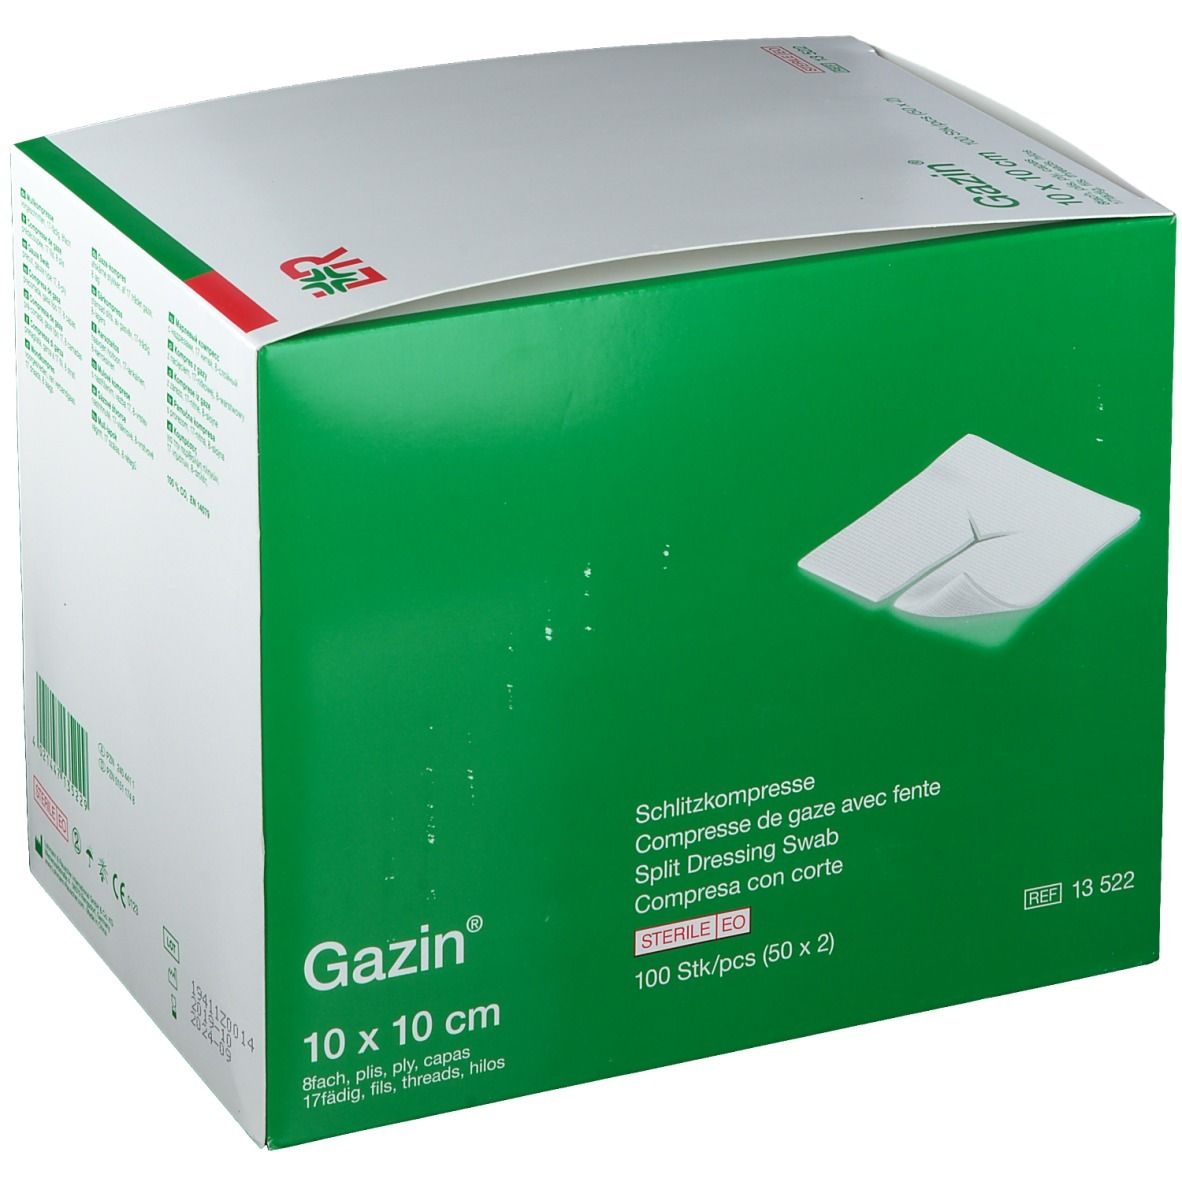 Gazin® Schlitzkompresse 10 cm x 10 cm steril 8 lagig